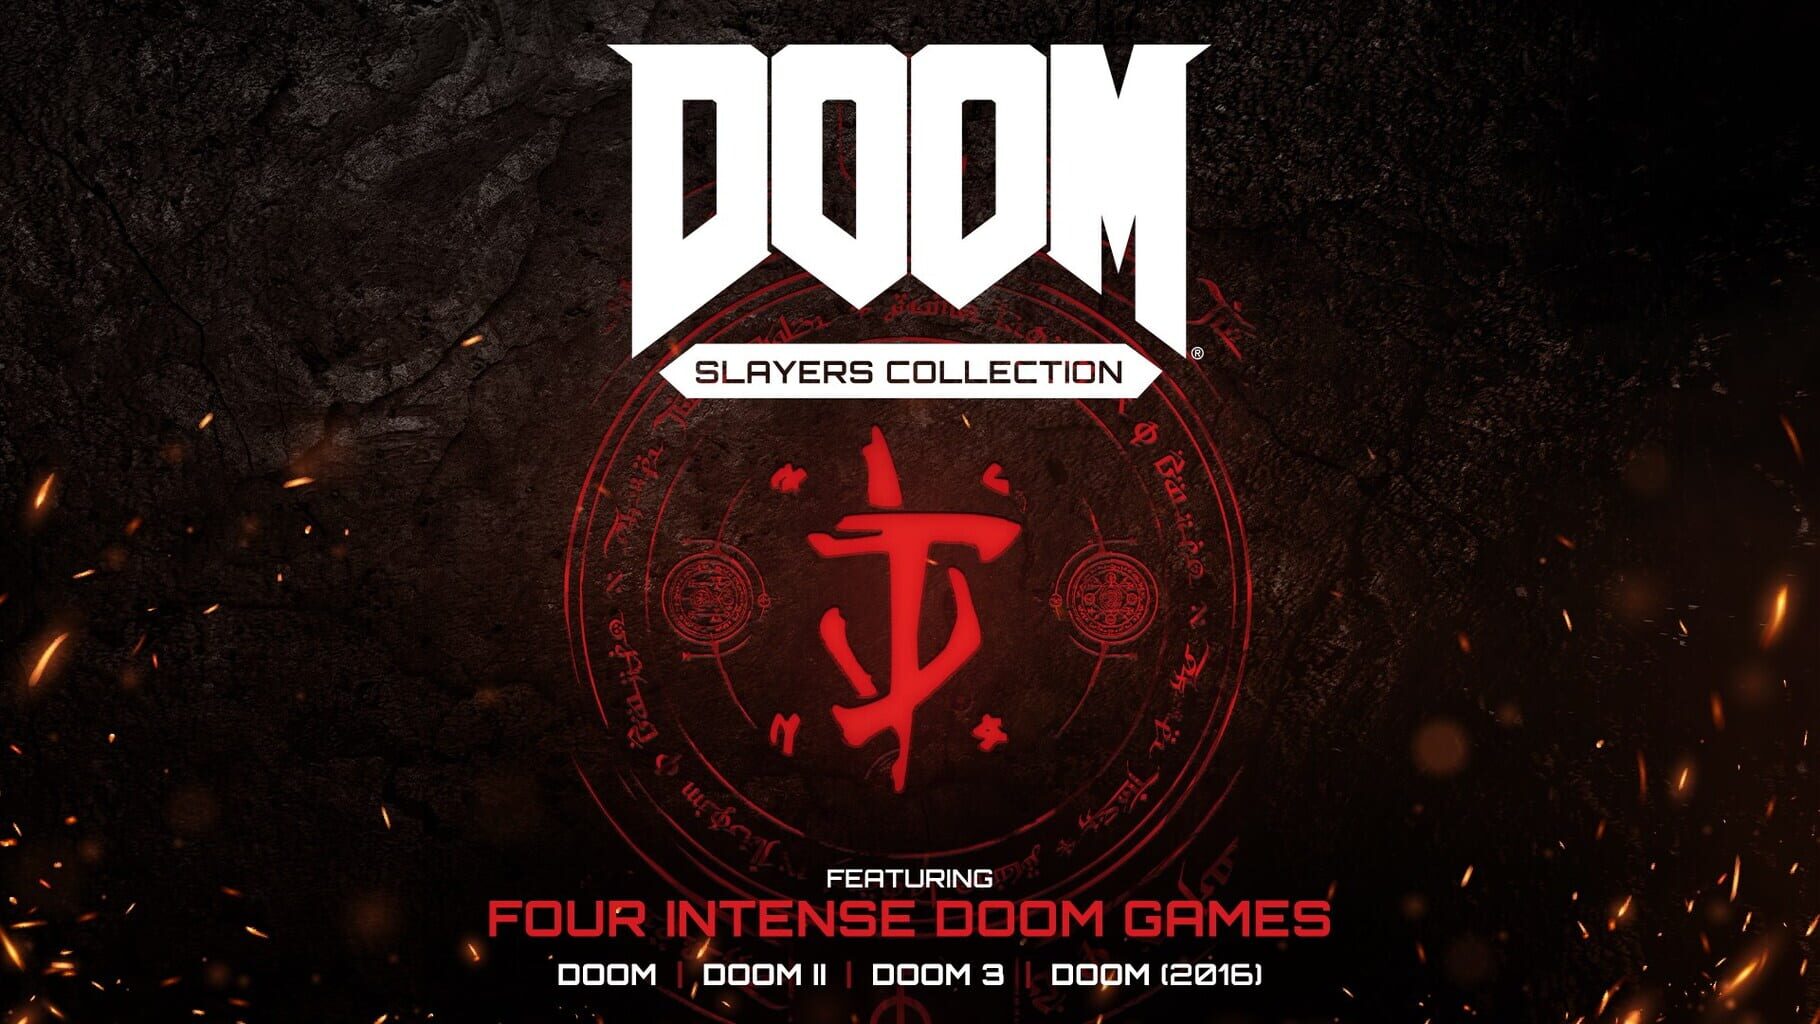 Arte - Doom Slayers Collection